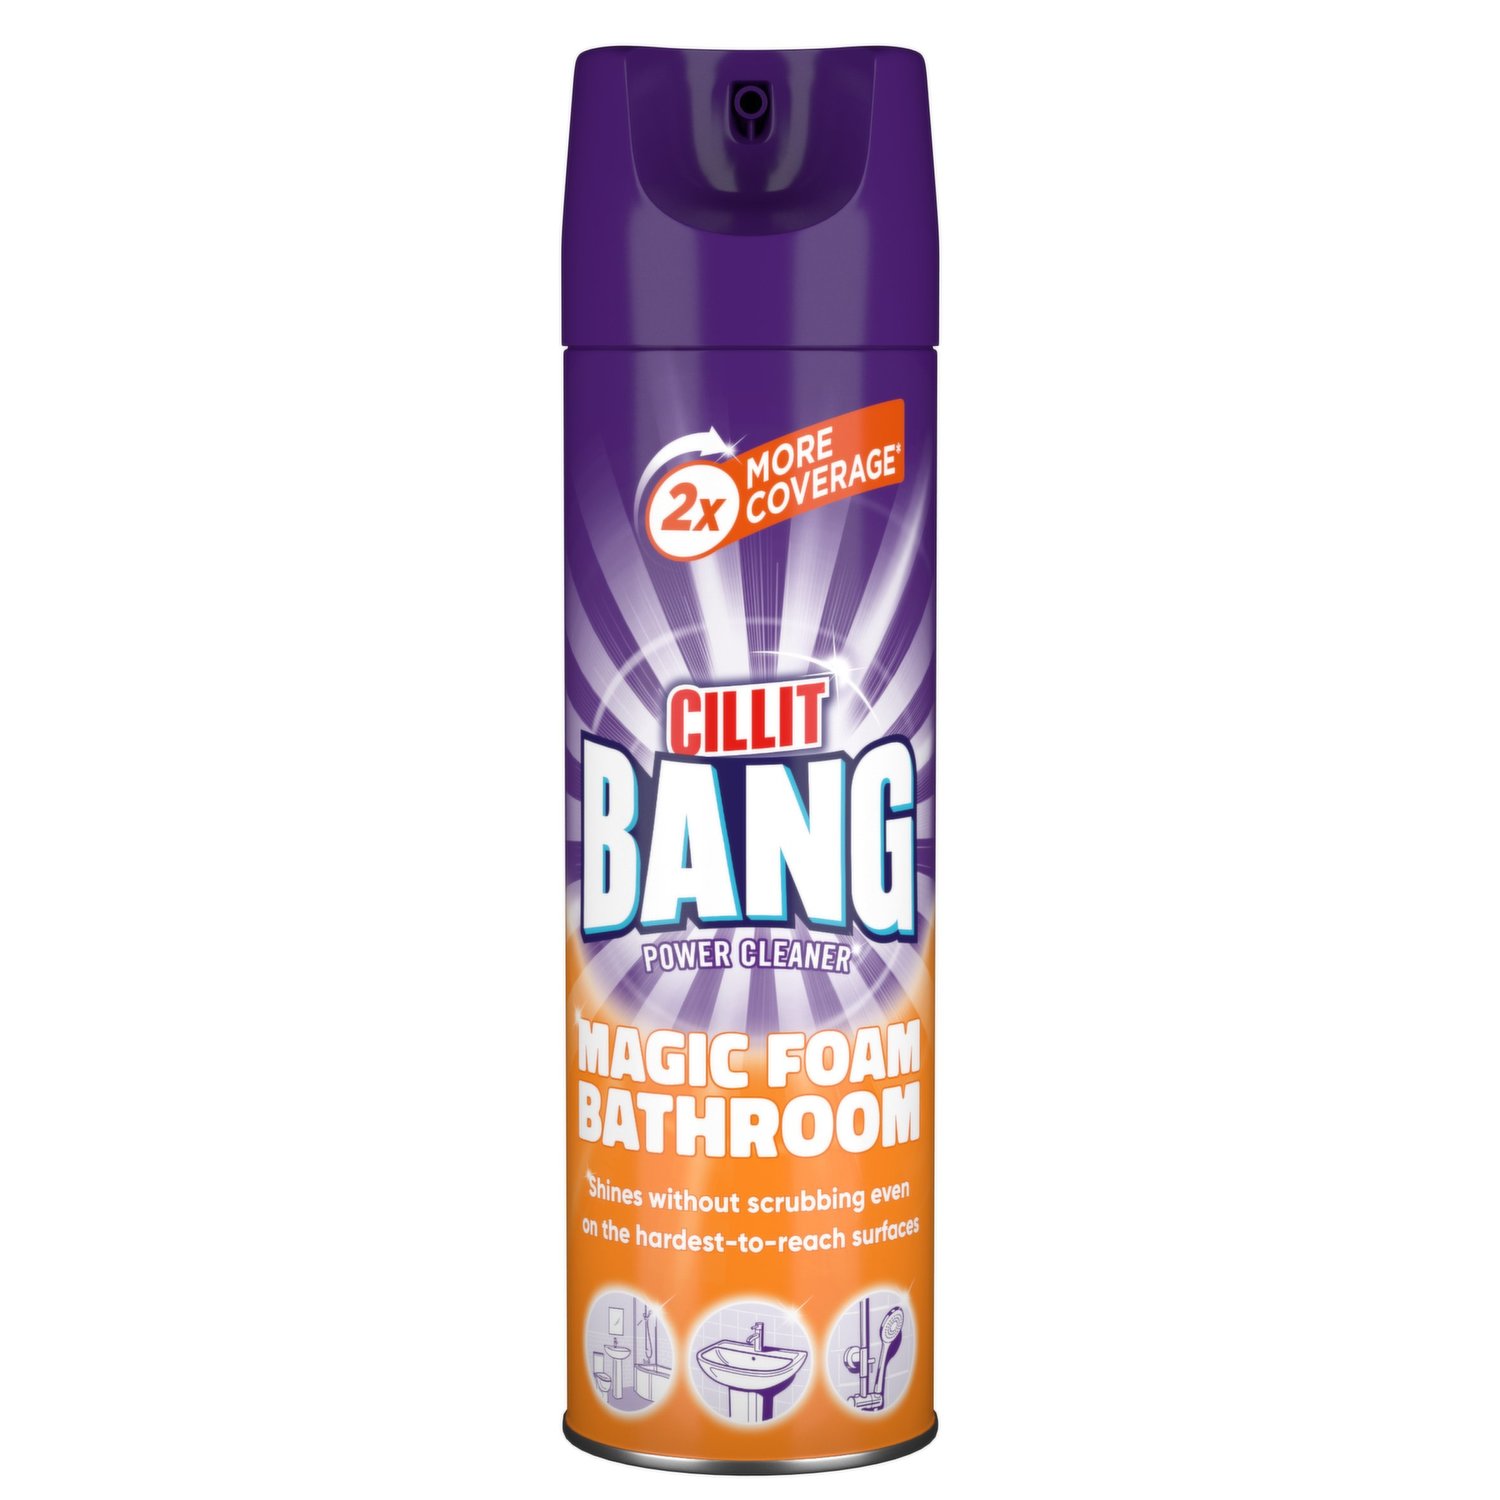 Cillit Bang Bathroom Foam - Dunnes Stores